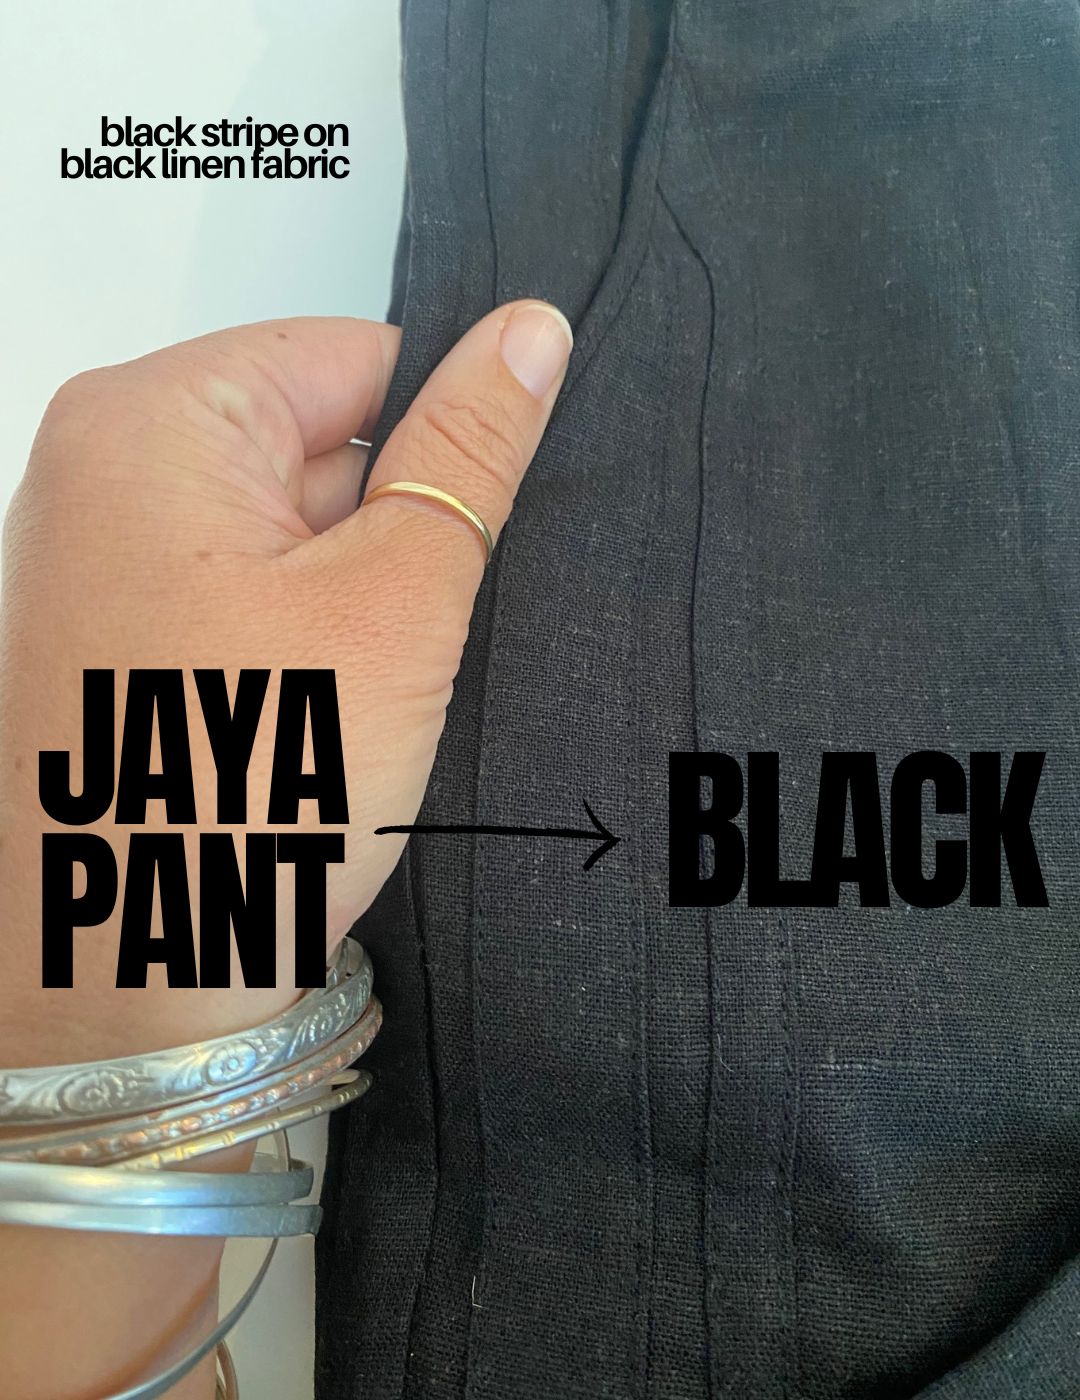 jaya pant in black linen